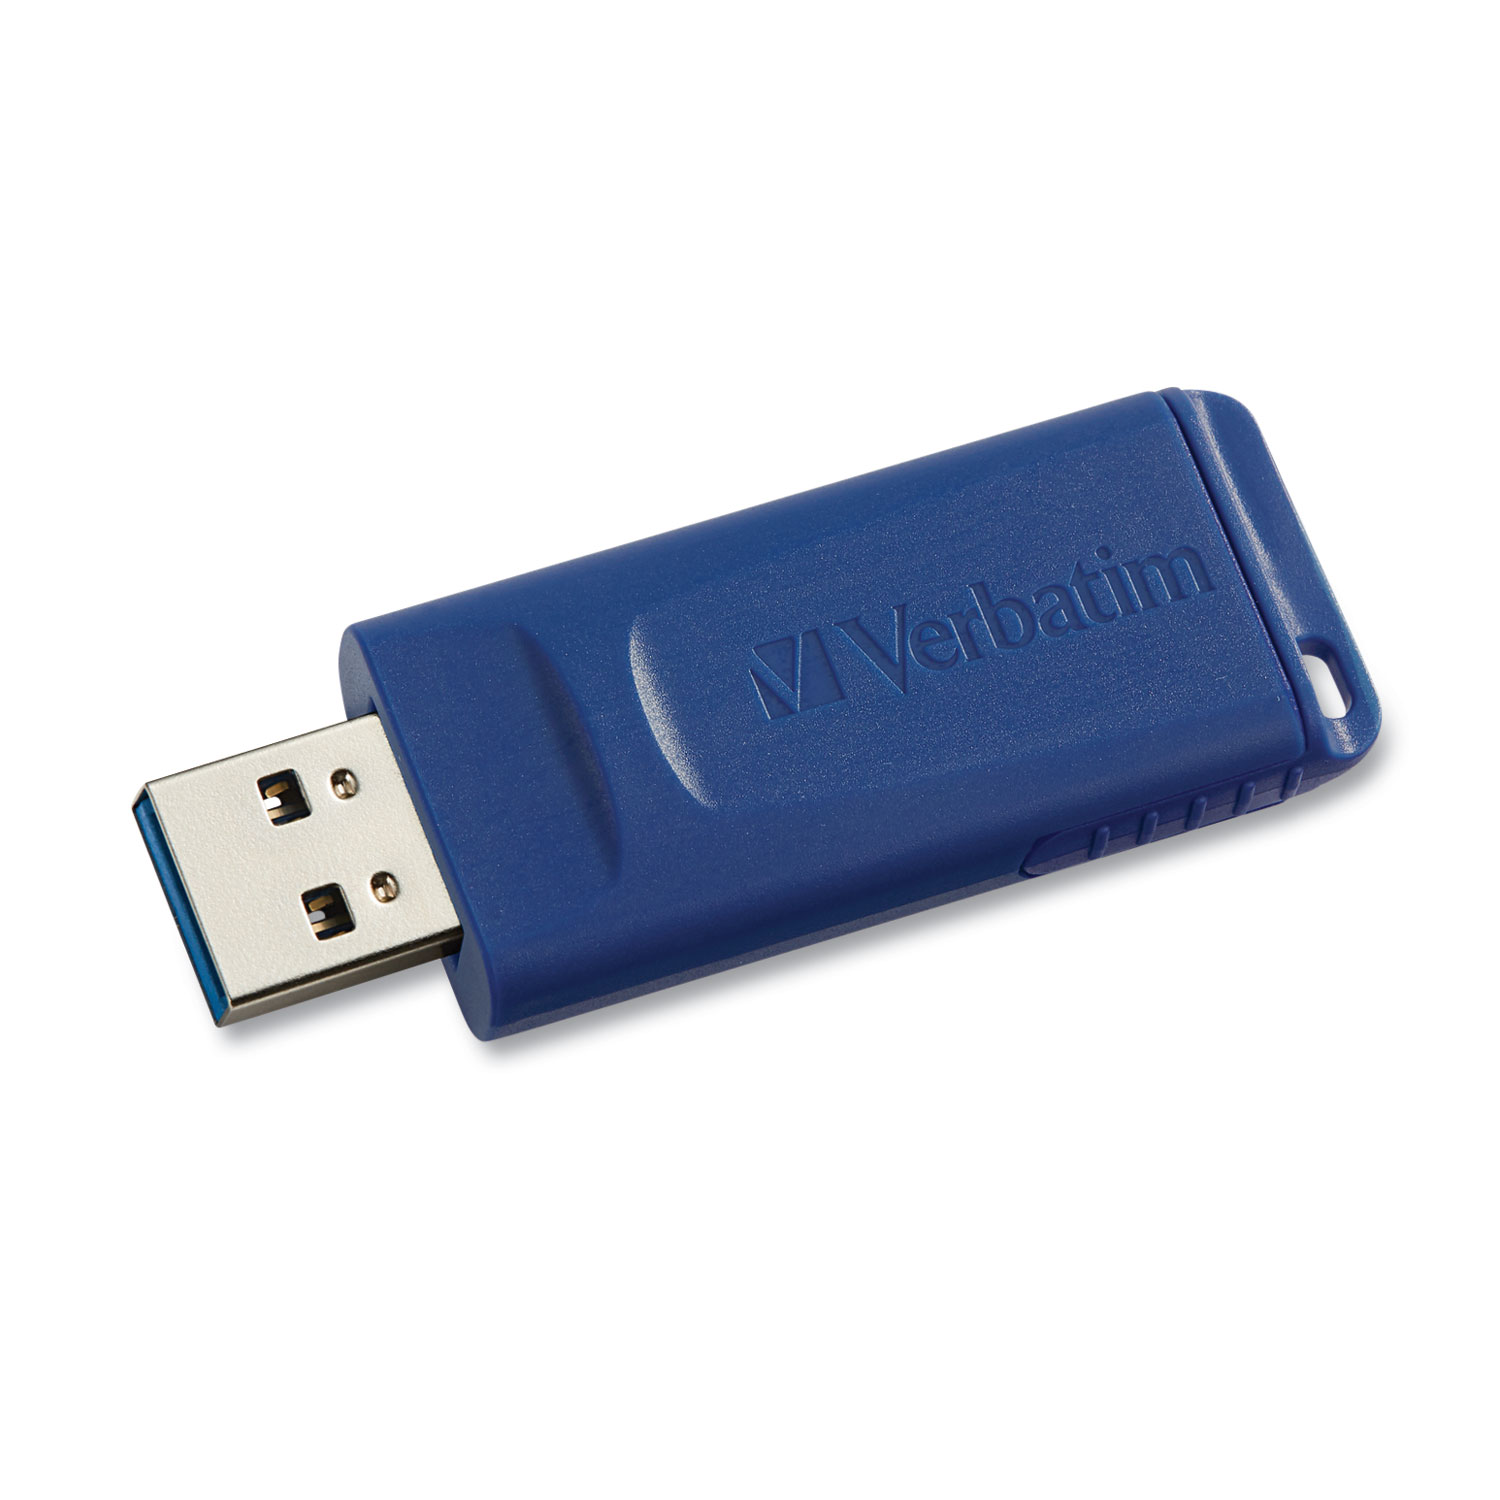  Verbatim 97275 Classic USB 2.0 Flash Drive, 16 GB, Blue (VER97275) 